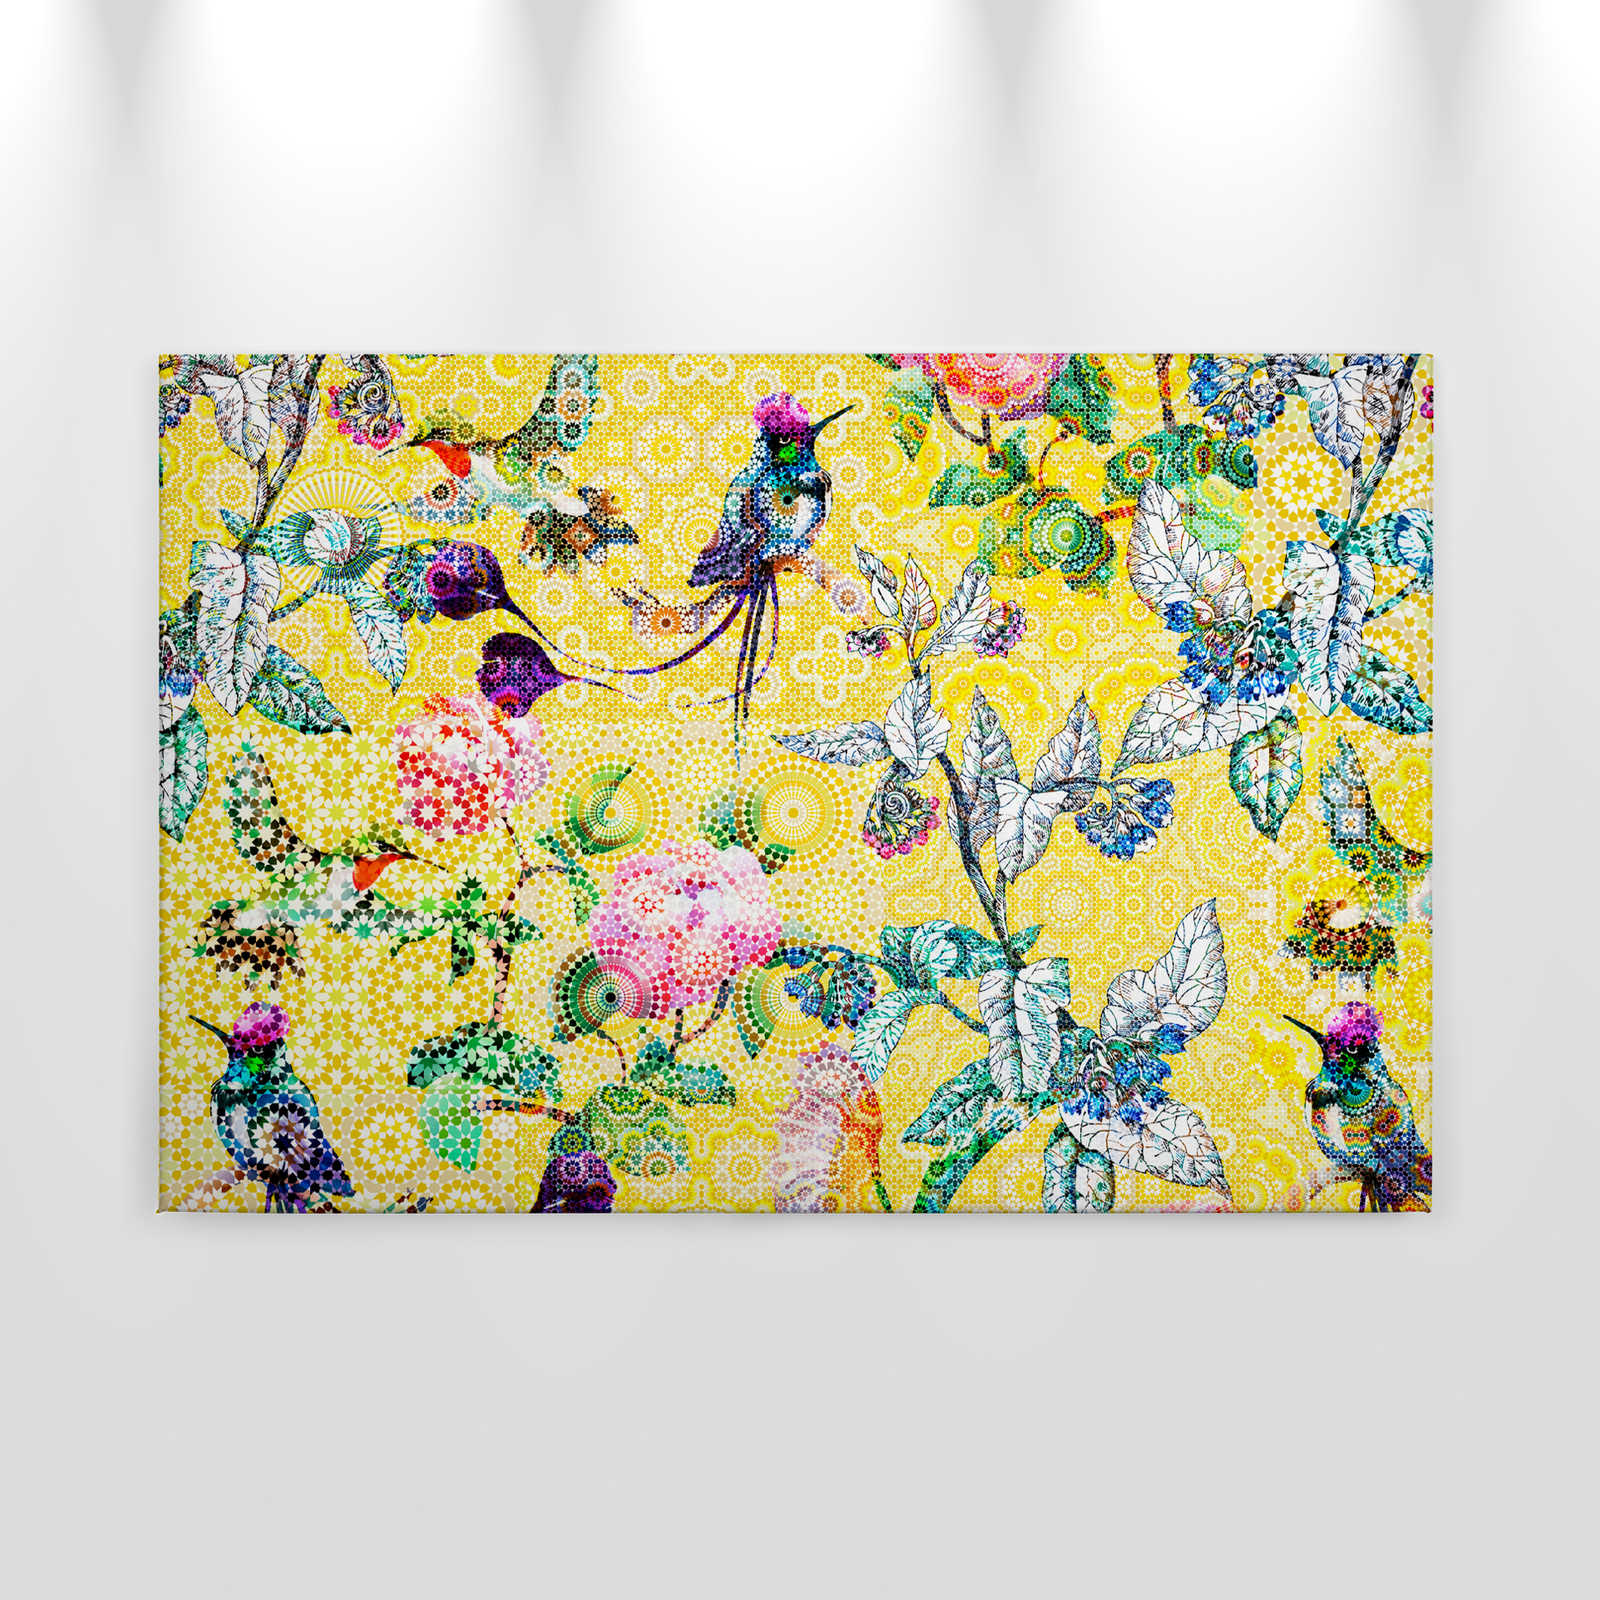             Tela dipinta a mosaico di fiori esotici - 0,90 m x 0,60 m
        